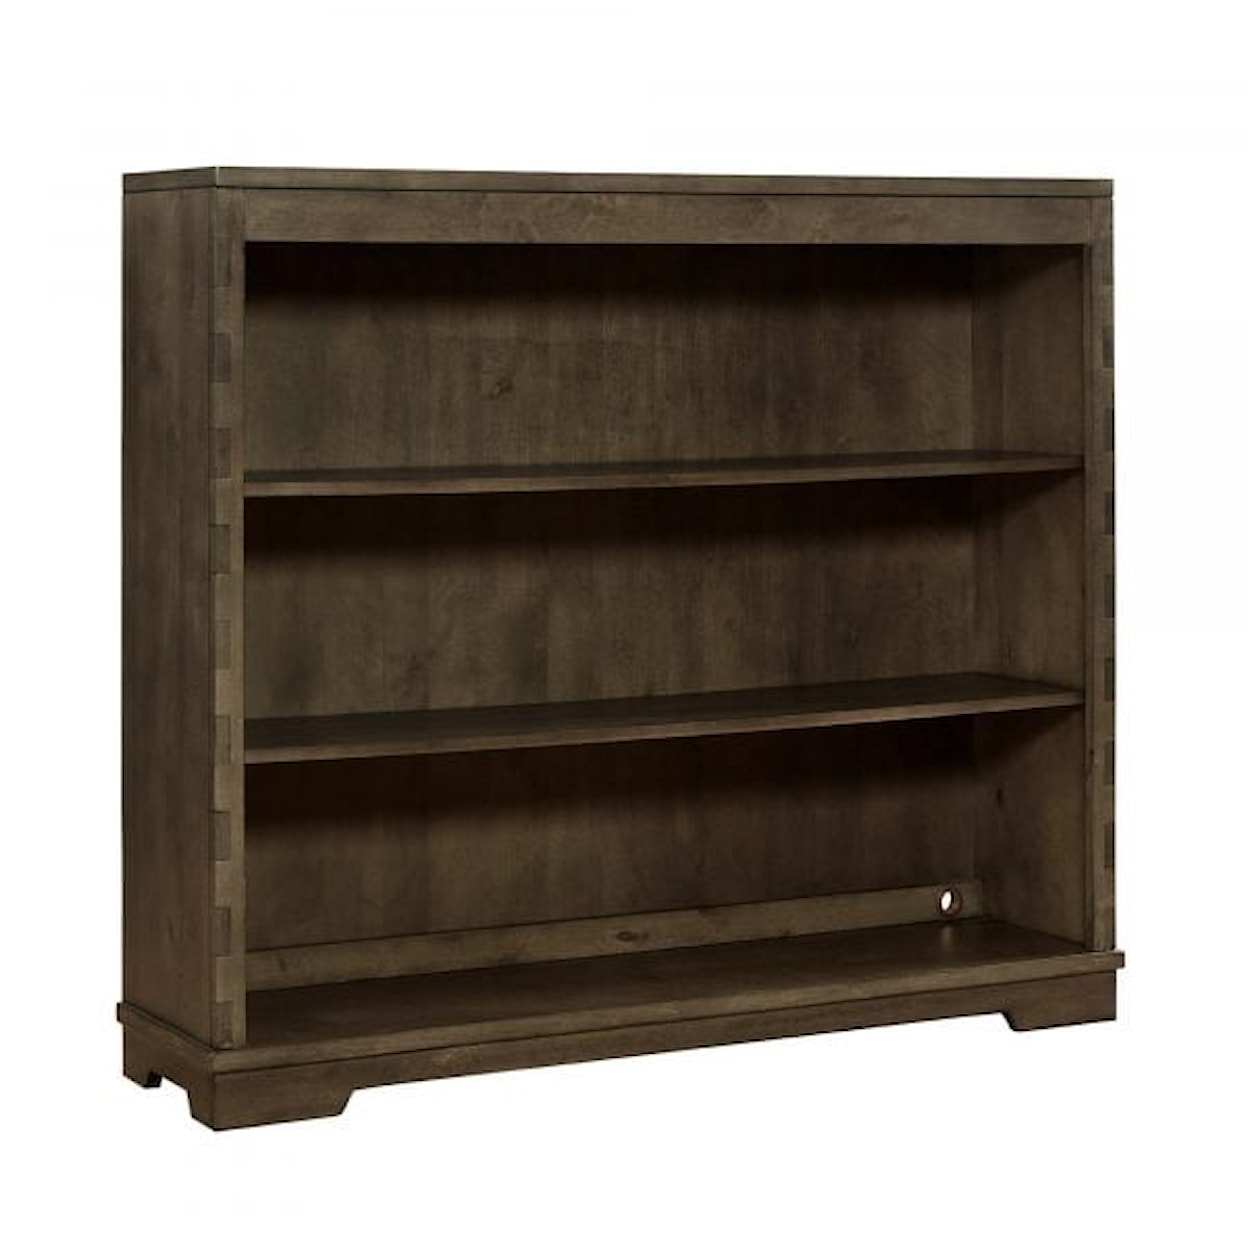 Westwood Design Dovetail Hutch/Bookcase